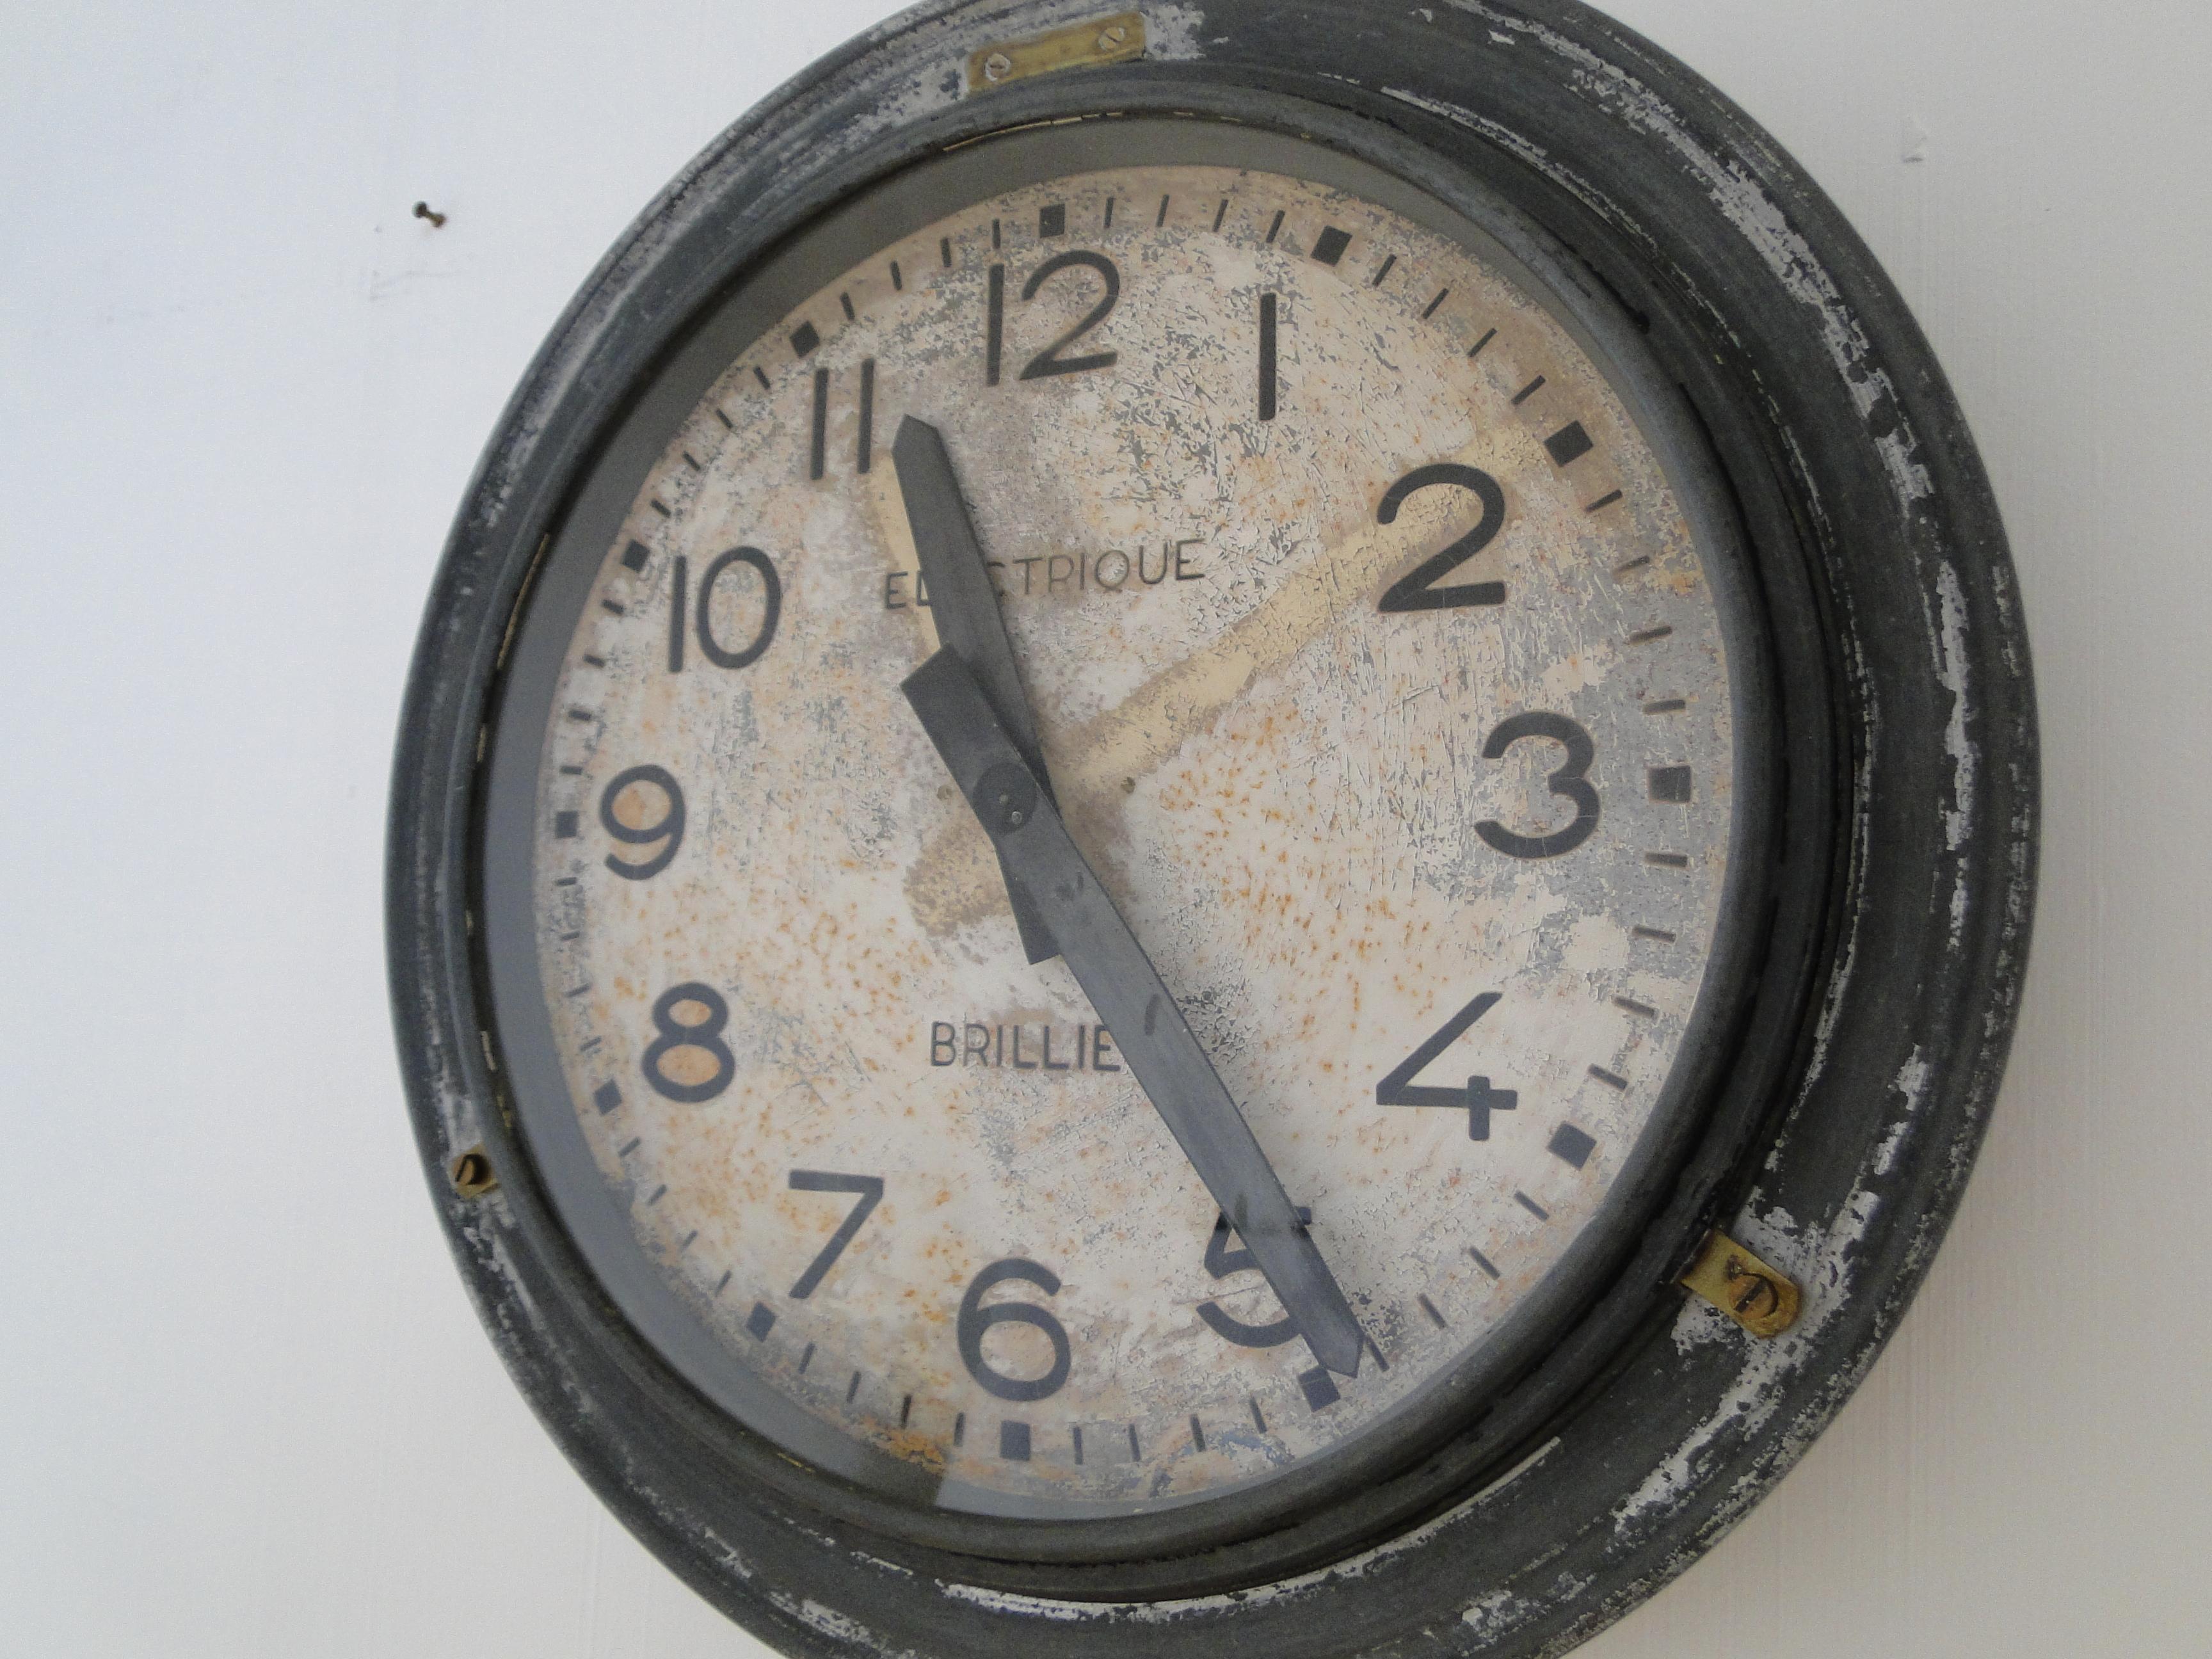 Brillie Vintage French Station Railway Clock Factory Industrial Paris France 1